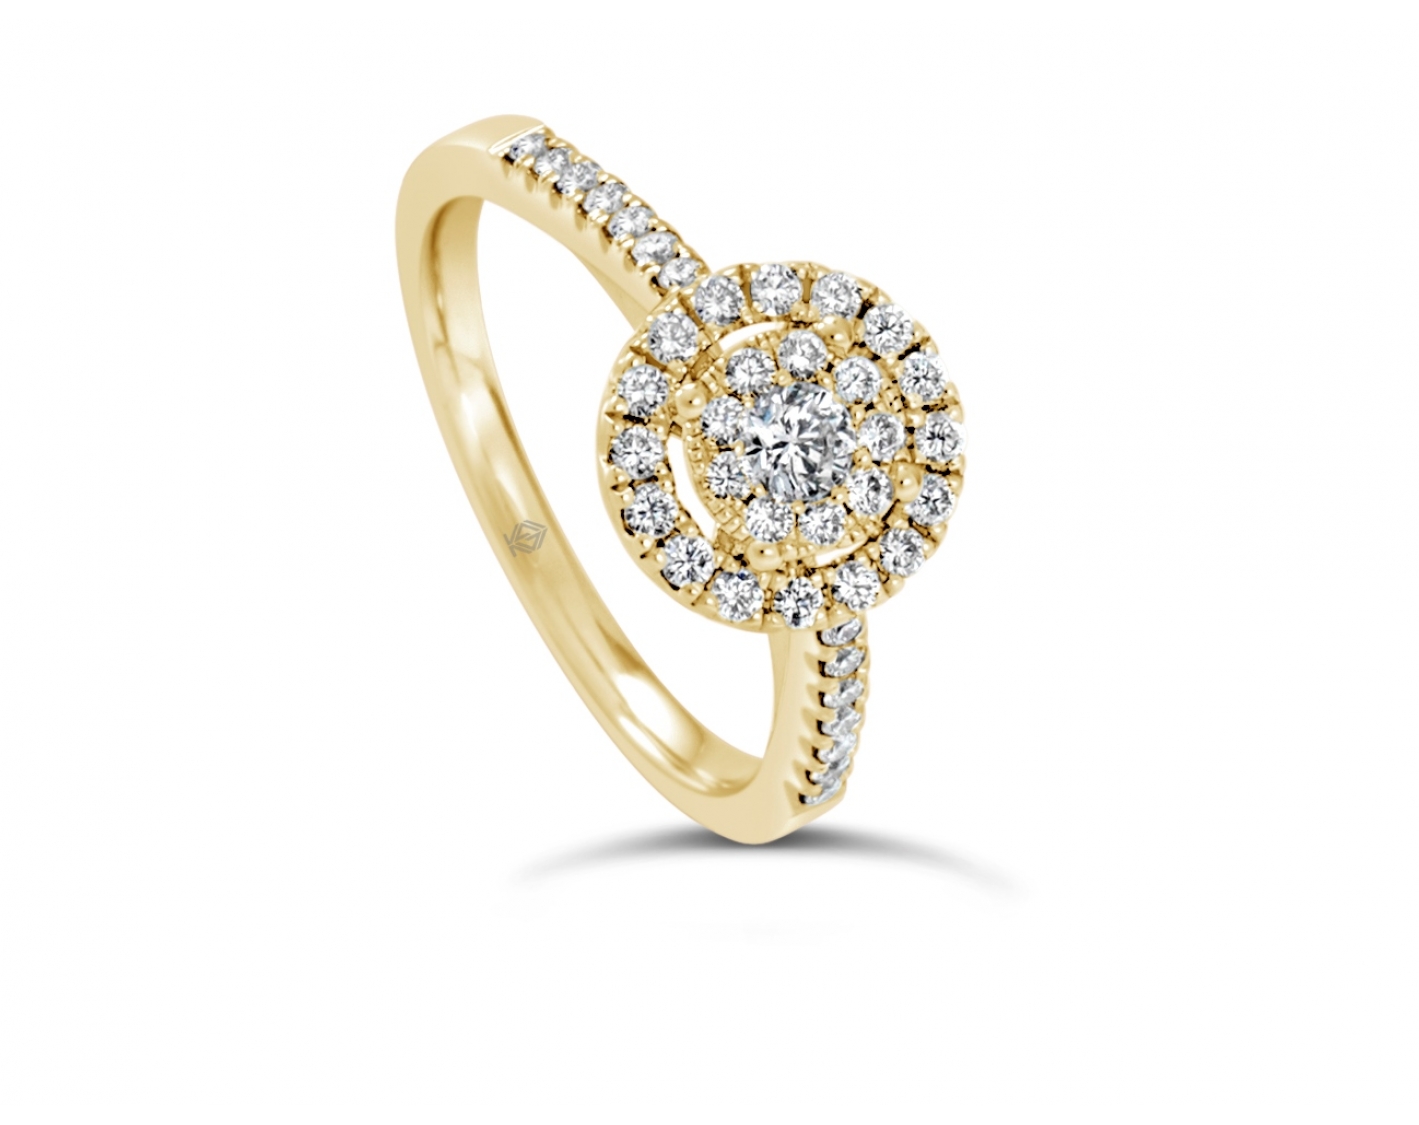 18k rose gold halo illusion set engagement ring with pave set sidestones Photos & images